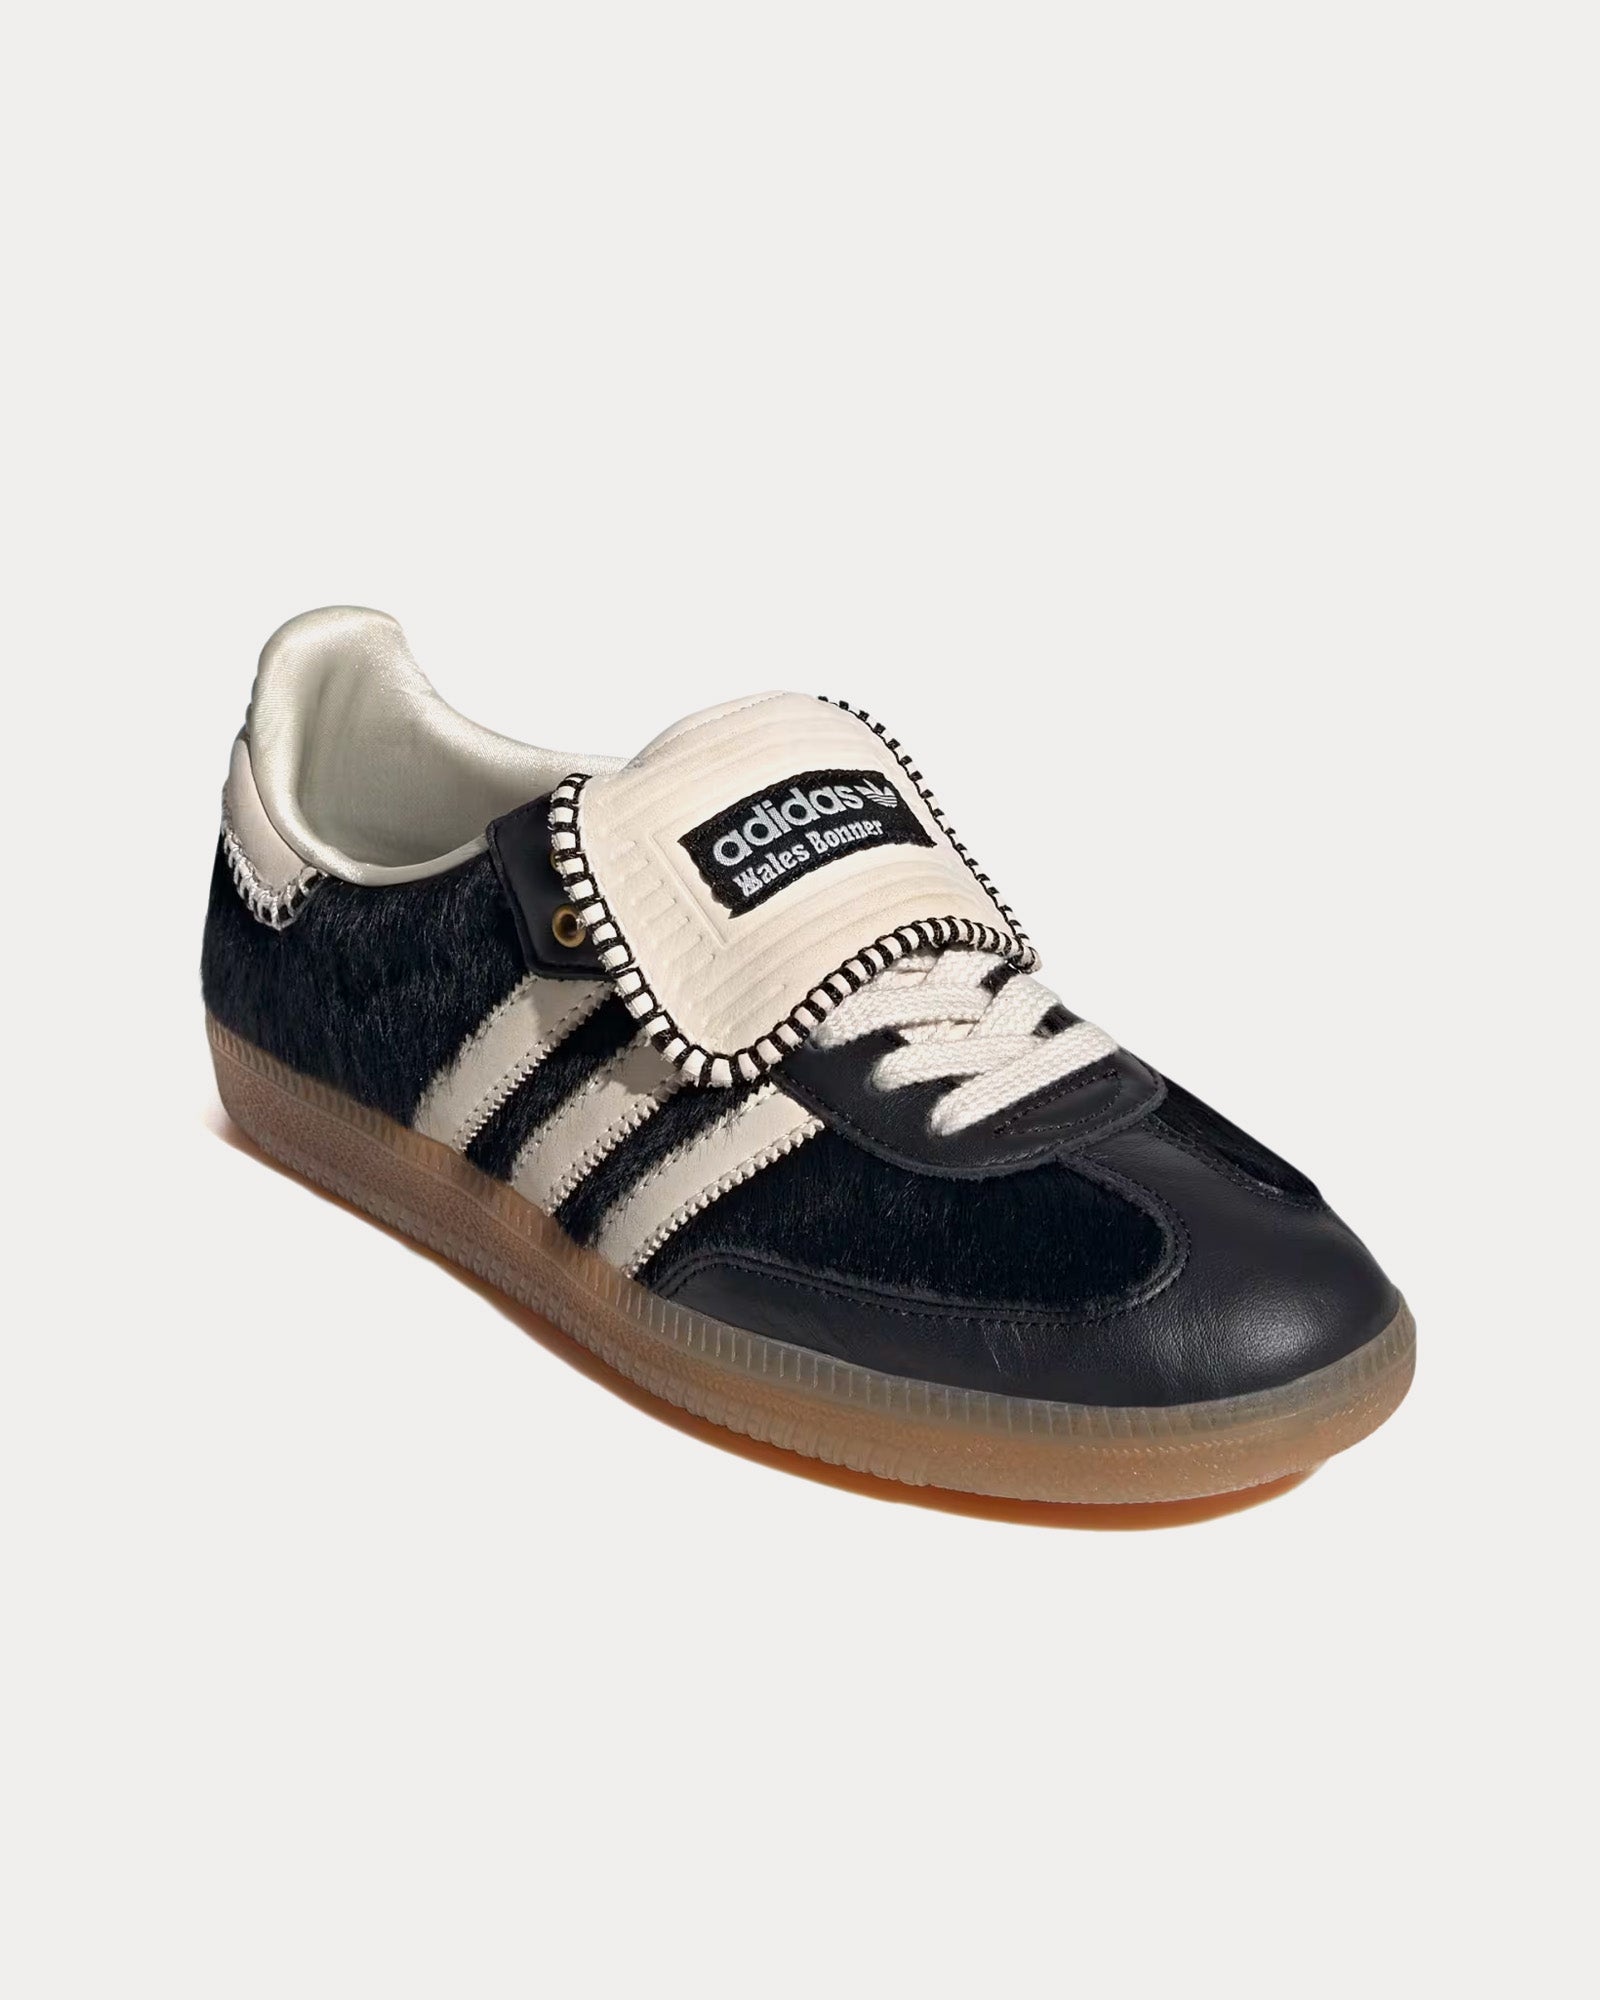 Adidas x Wales Bonner - Samba Pony Tonal Core Black / Cream White / Cream White Low Top Sneakers